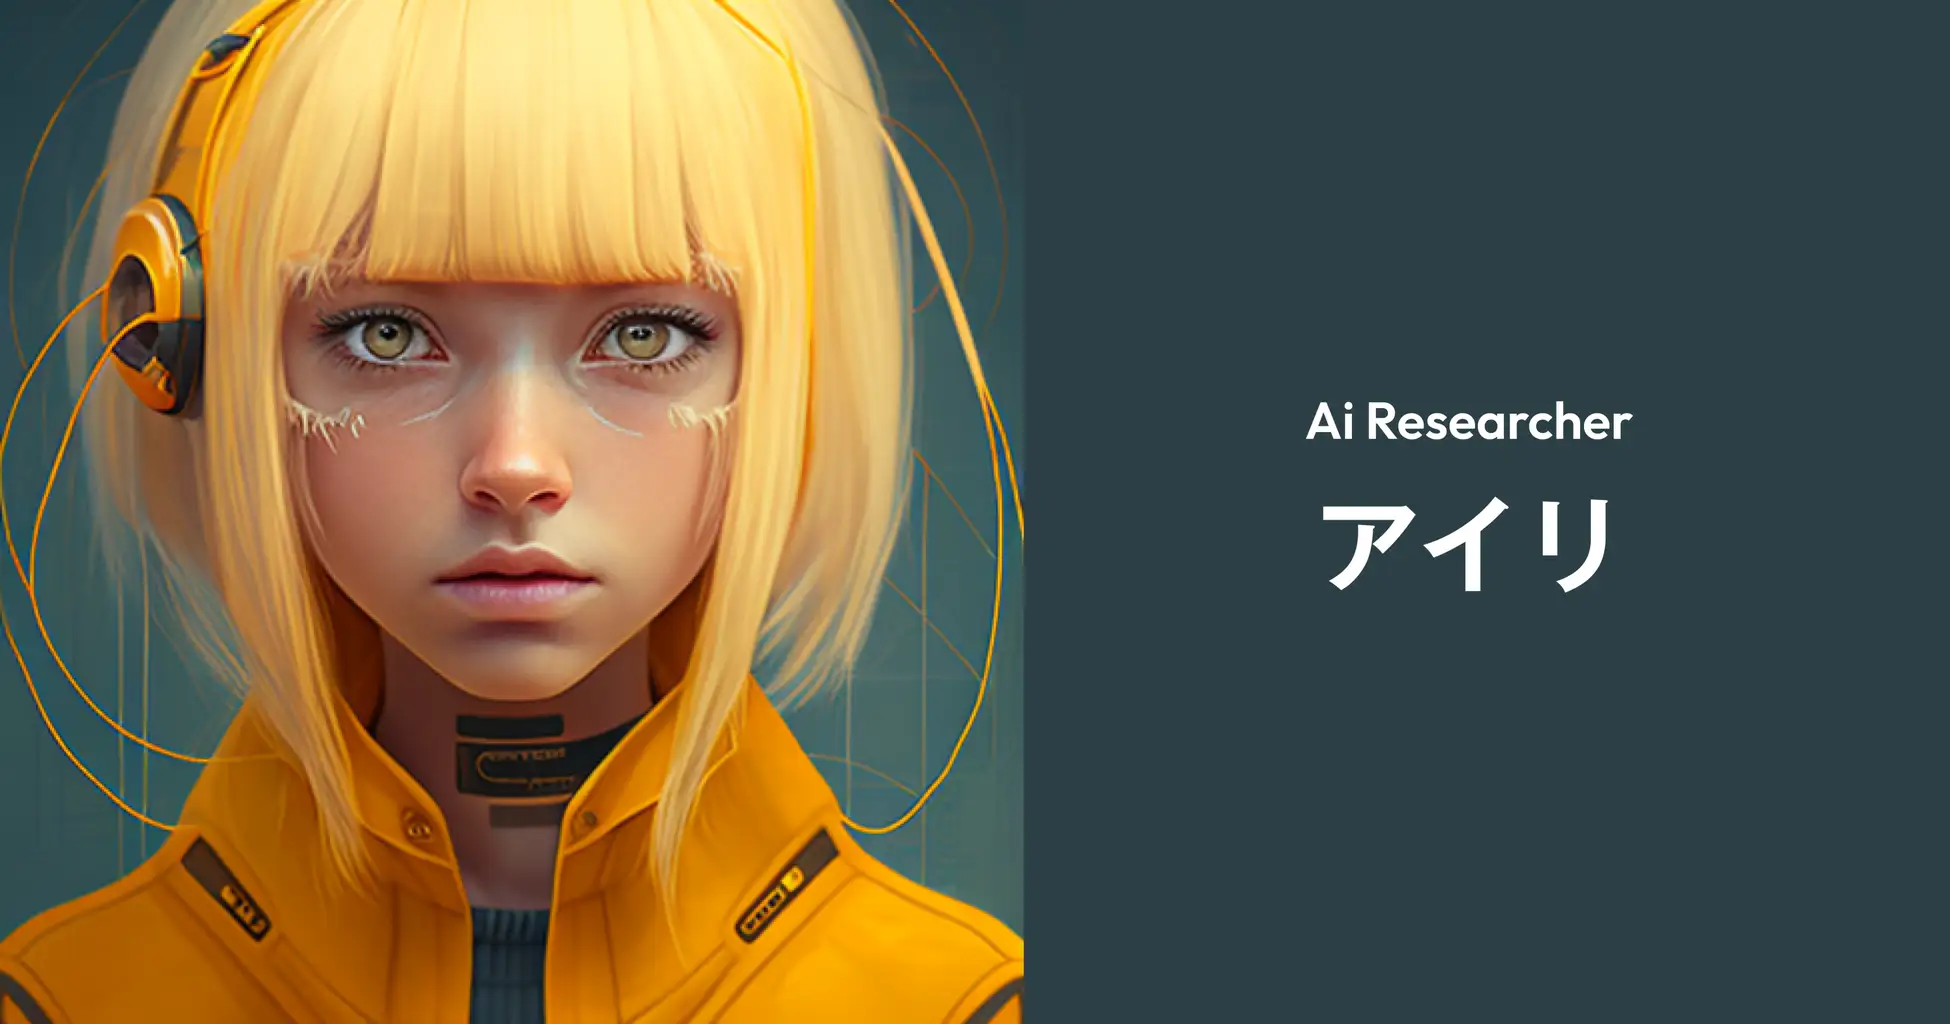 AIアート×AIチャットボットによる"Ai Researcher"が誕生！リサーチ業務のアシスタントとして実証実験をスタート！